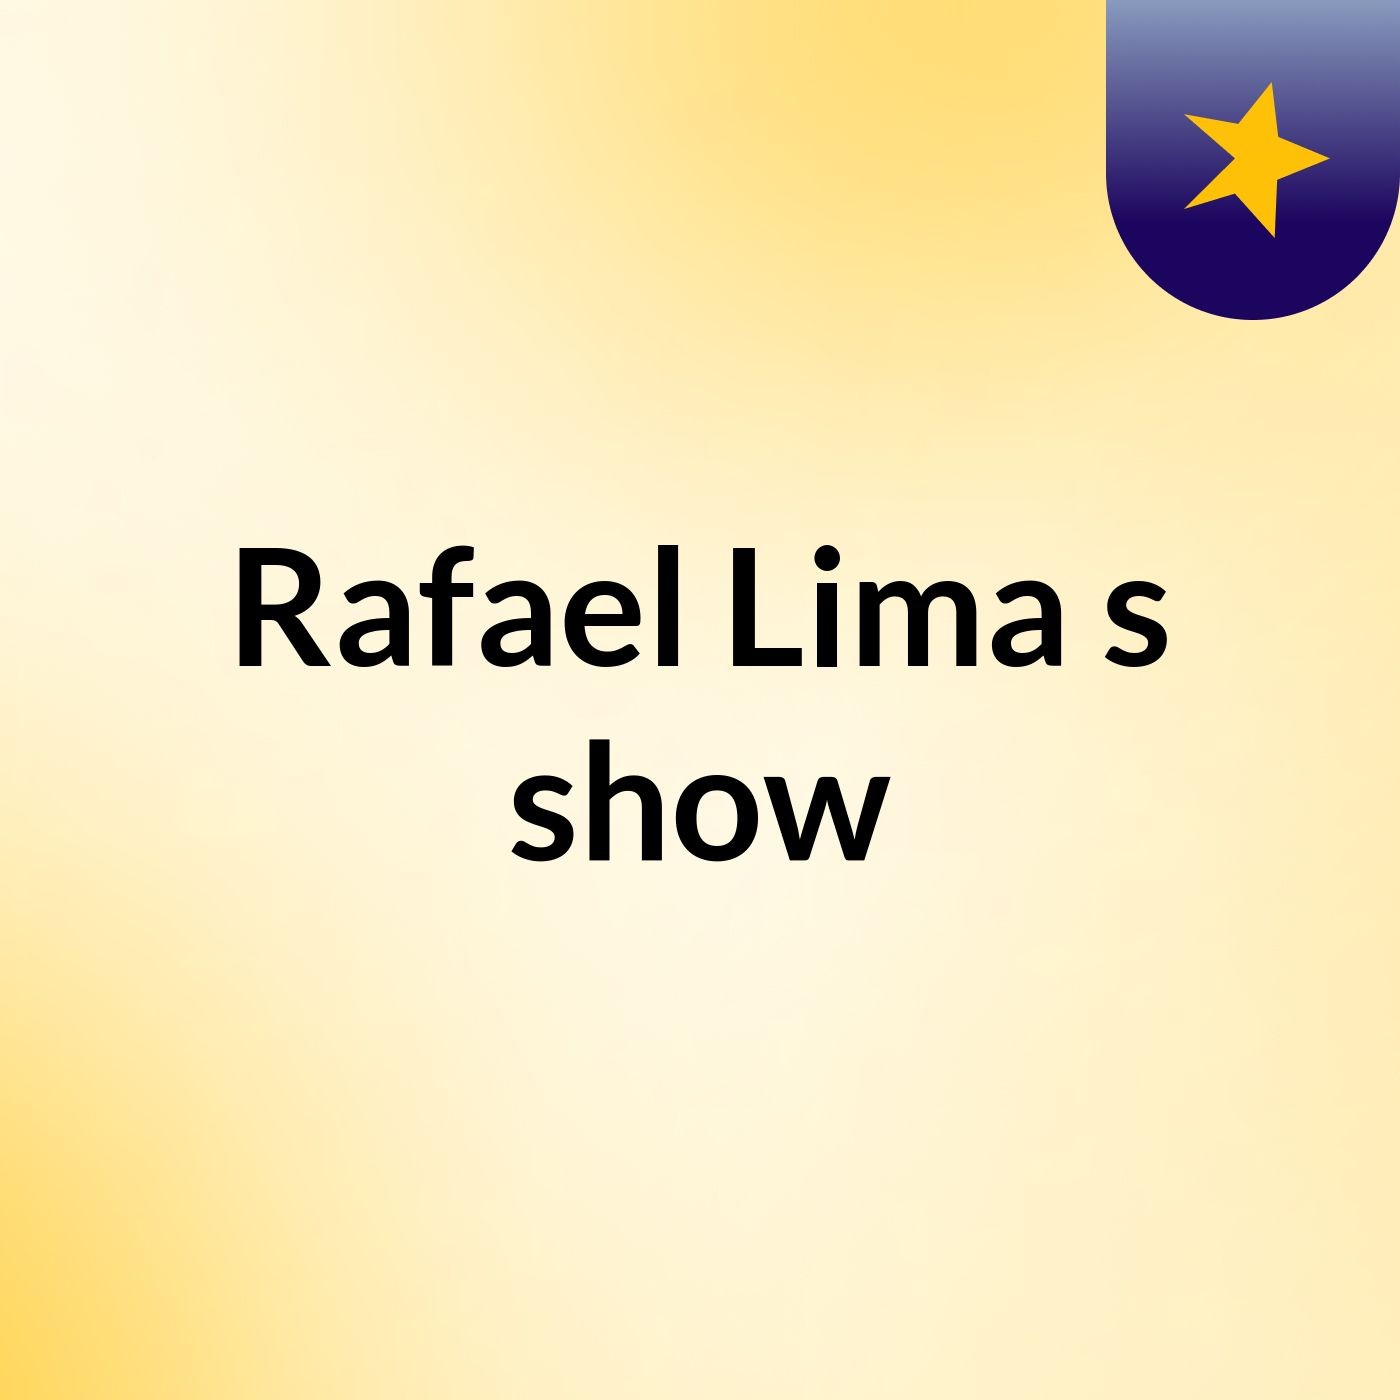 Rafael Lima's show